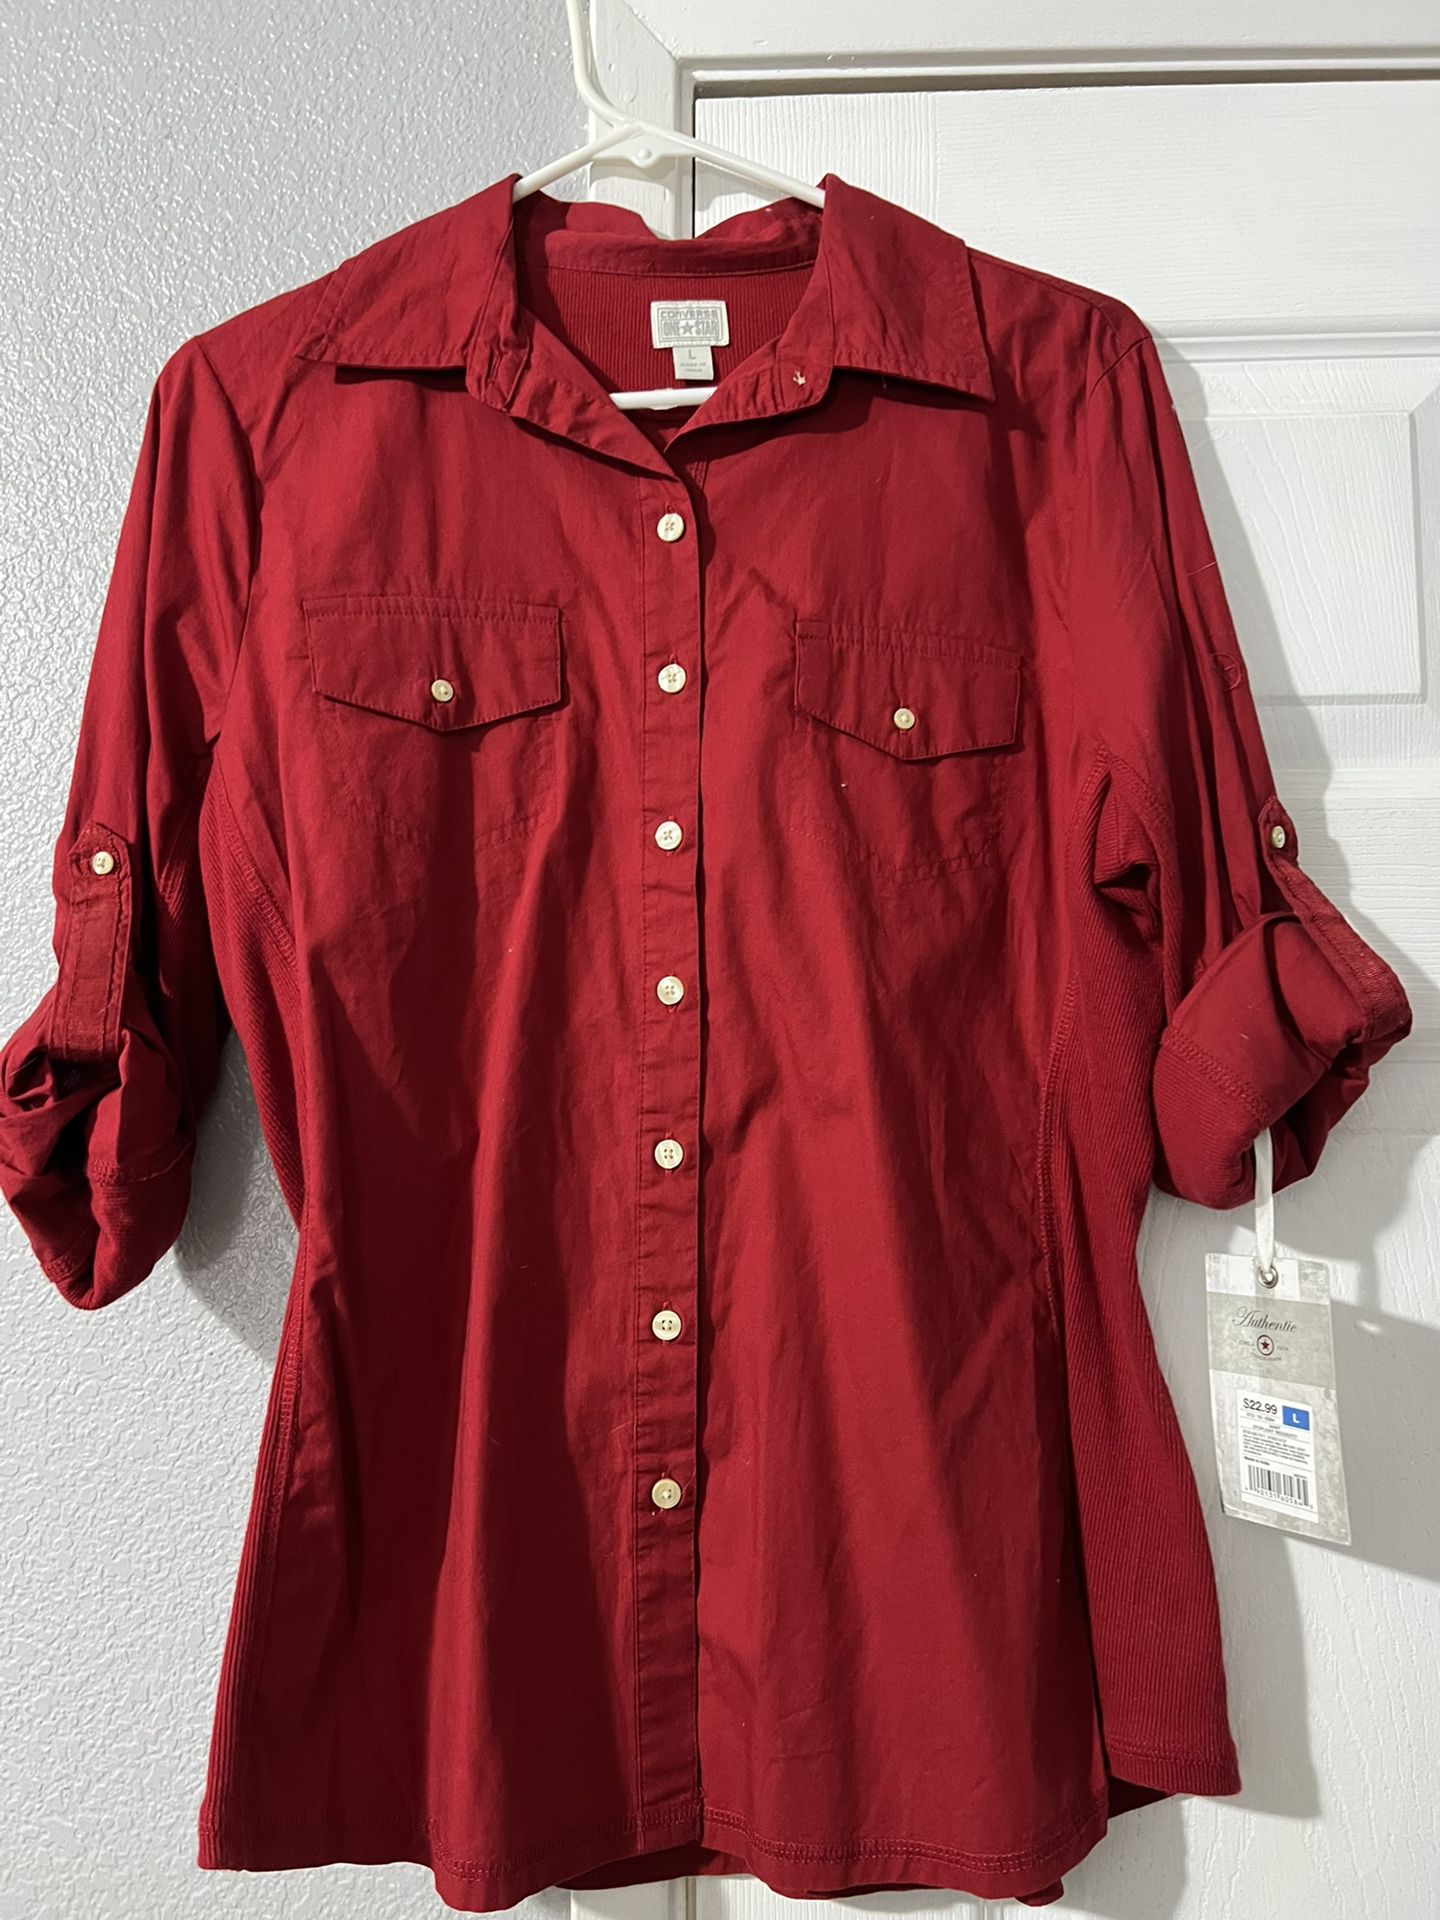 Womens Red Converse Shirt - New